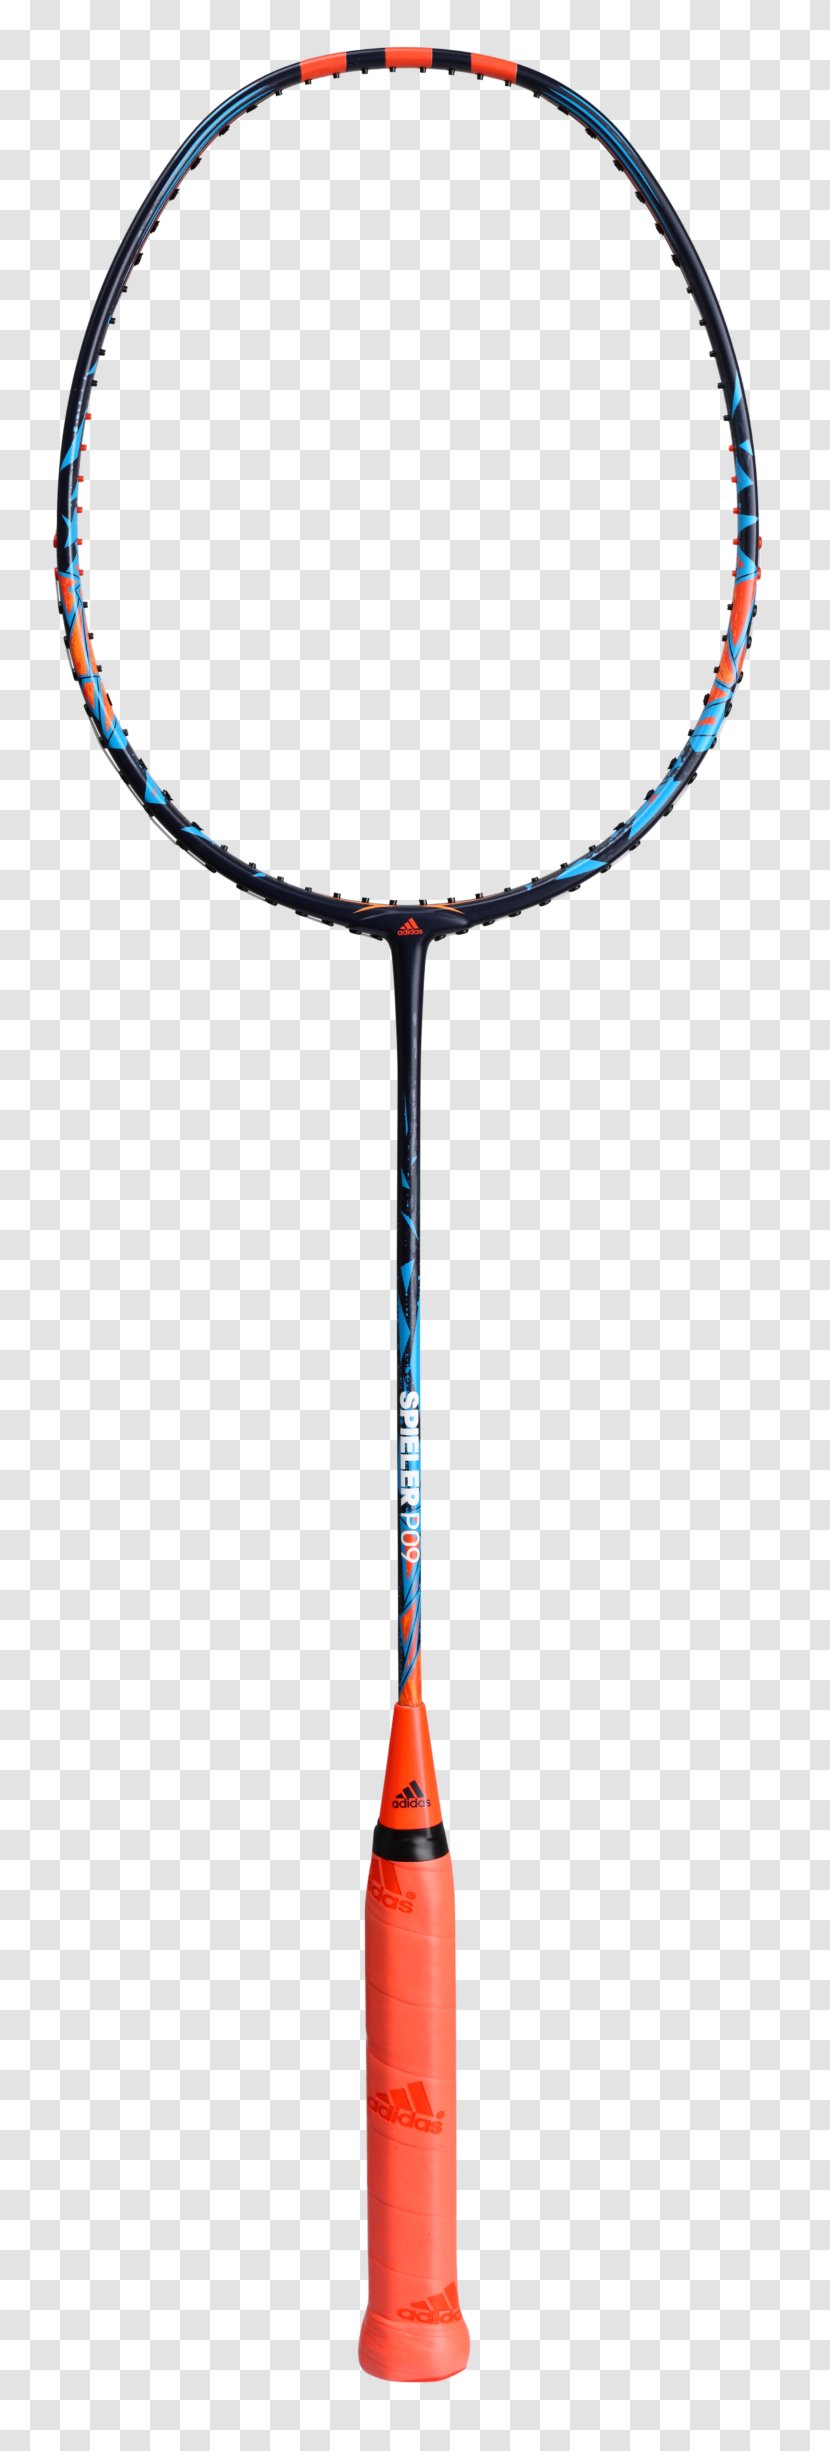 Badmintonracket Sporting Goods Strings - Badminton Transparent PNG